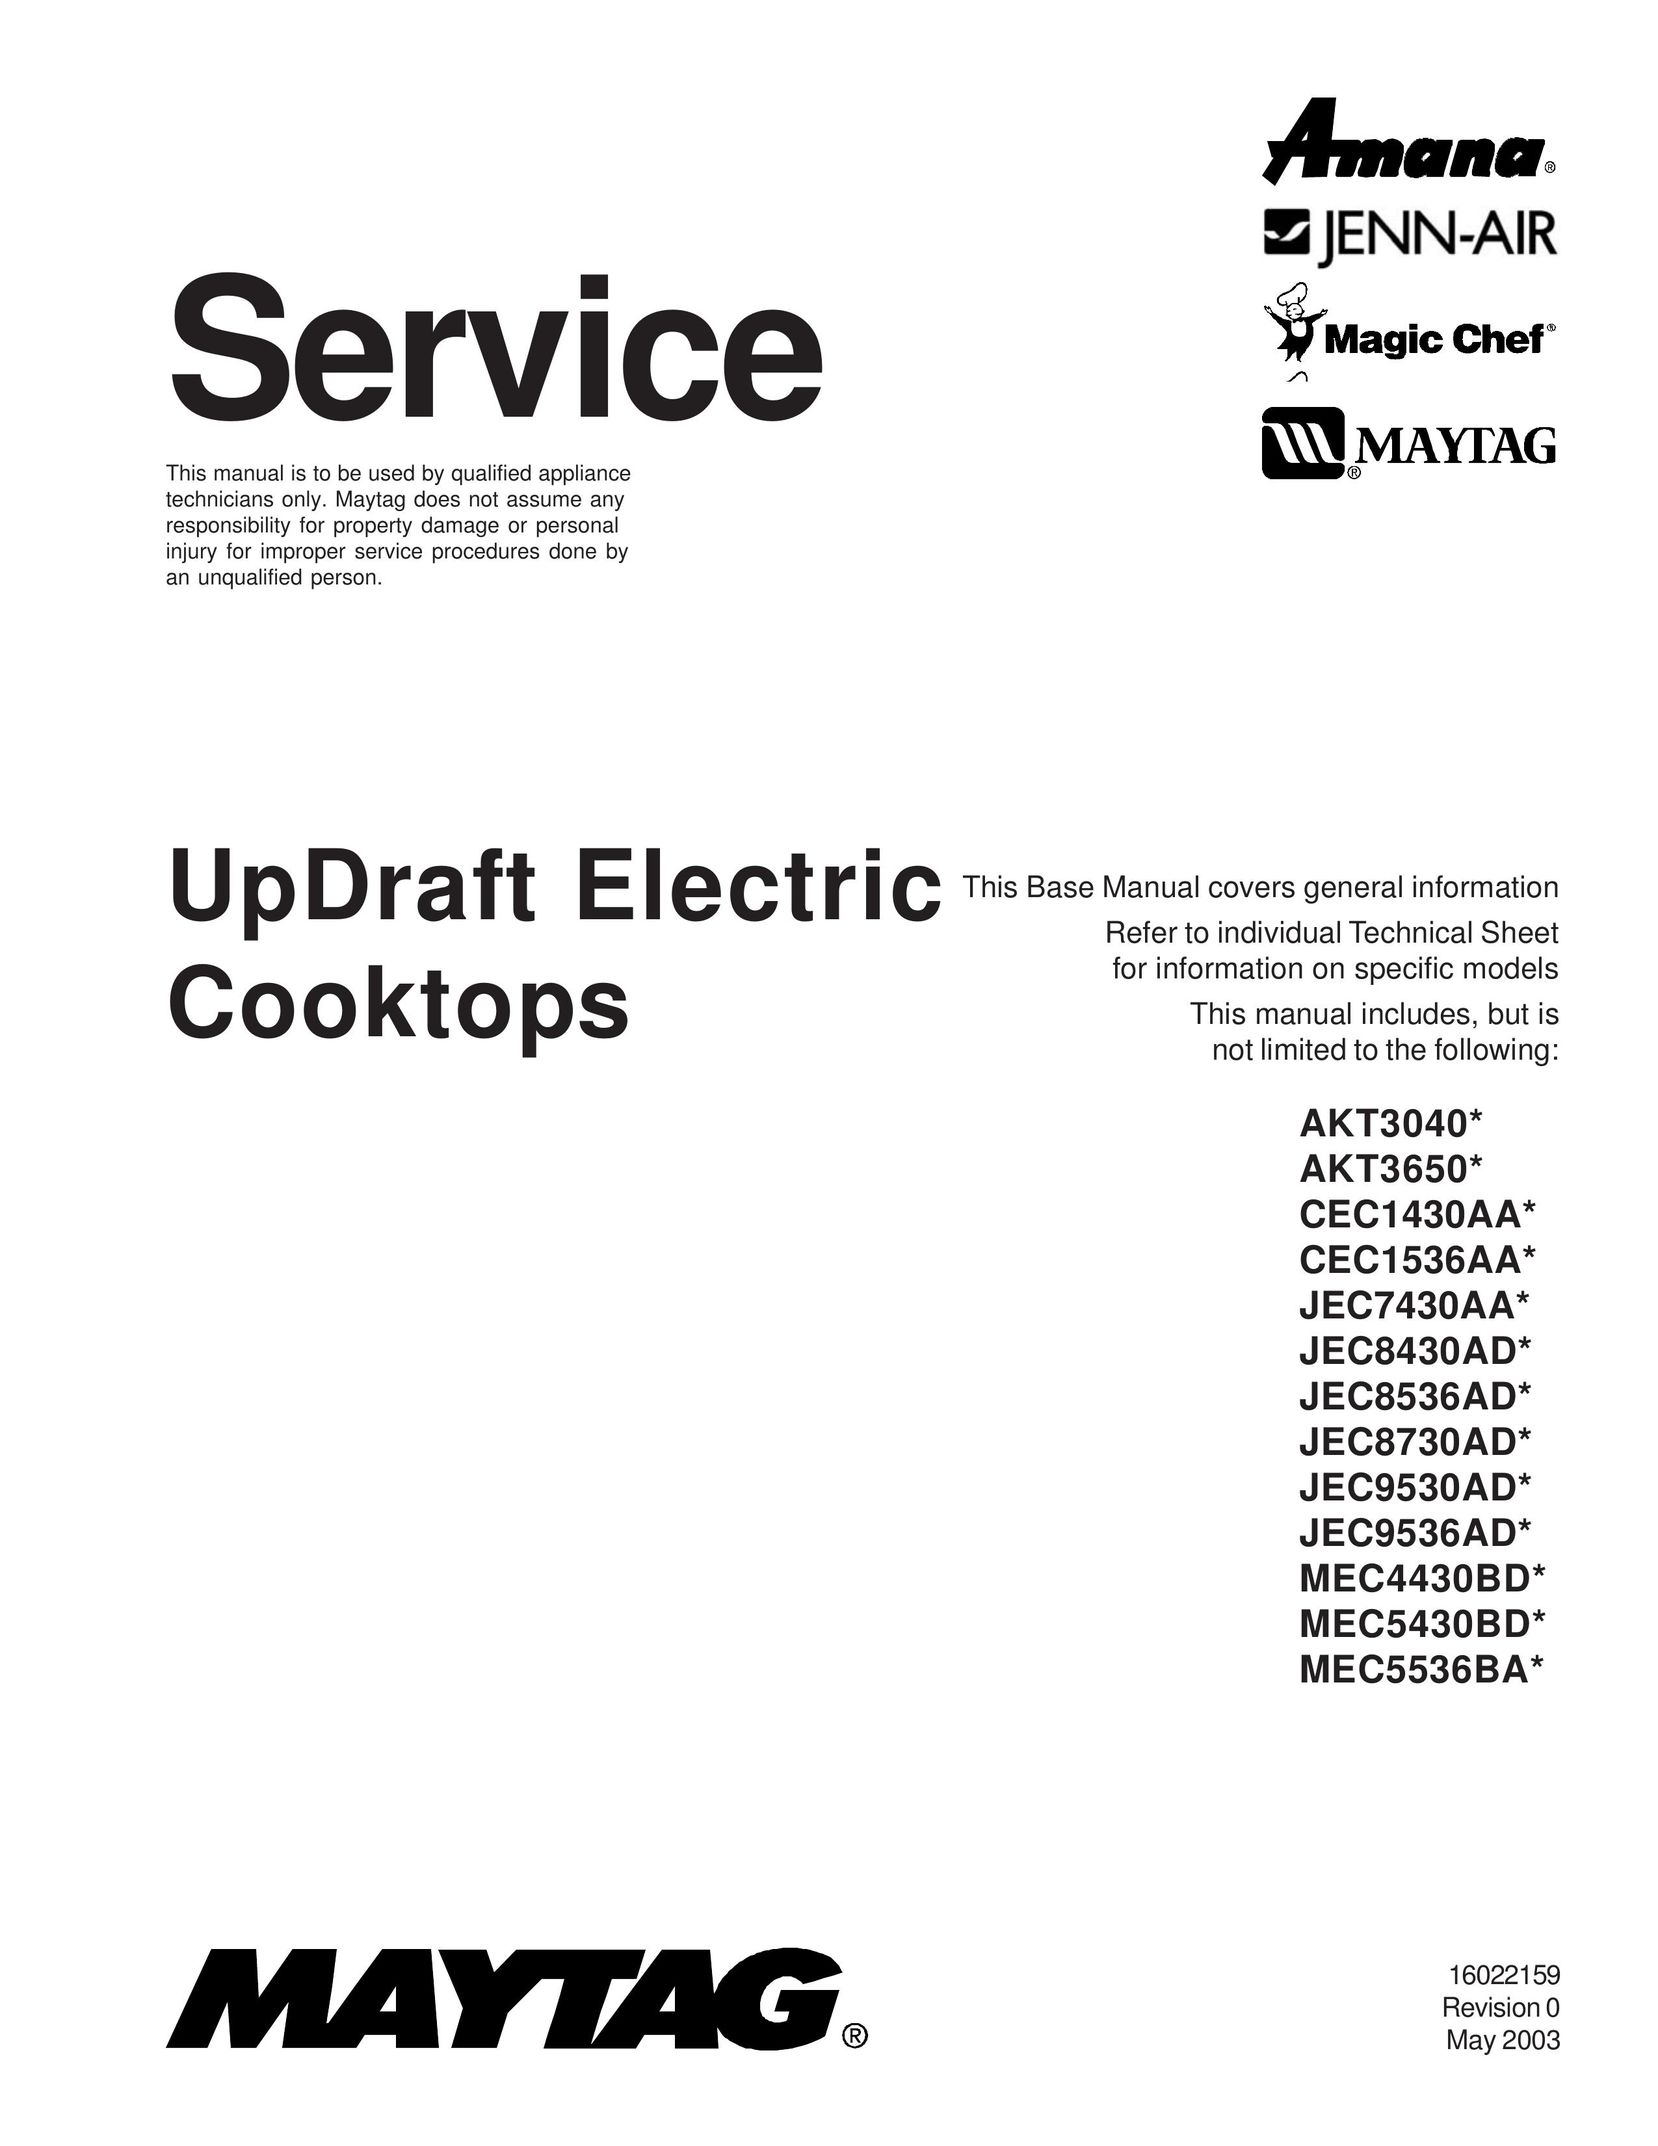 Maytag JEC9530AD Cooktop User Manual